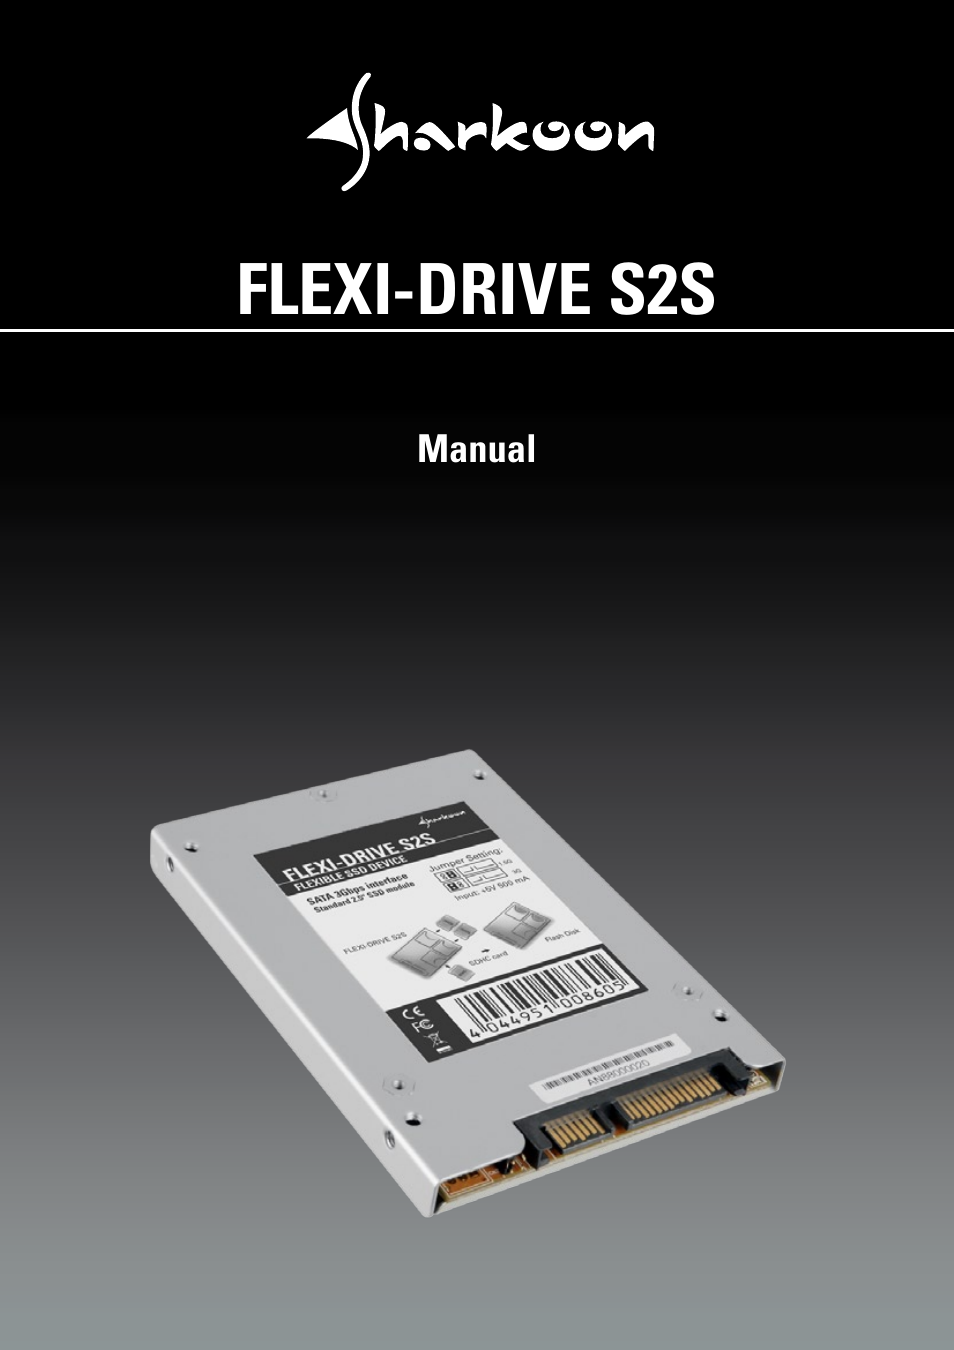 Flexi-Drive S2S